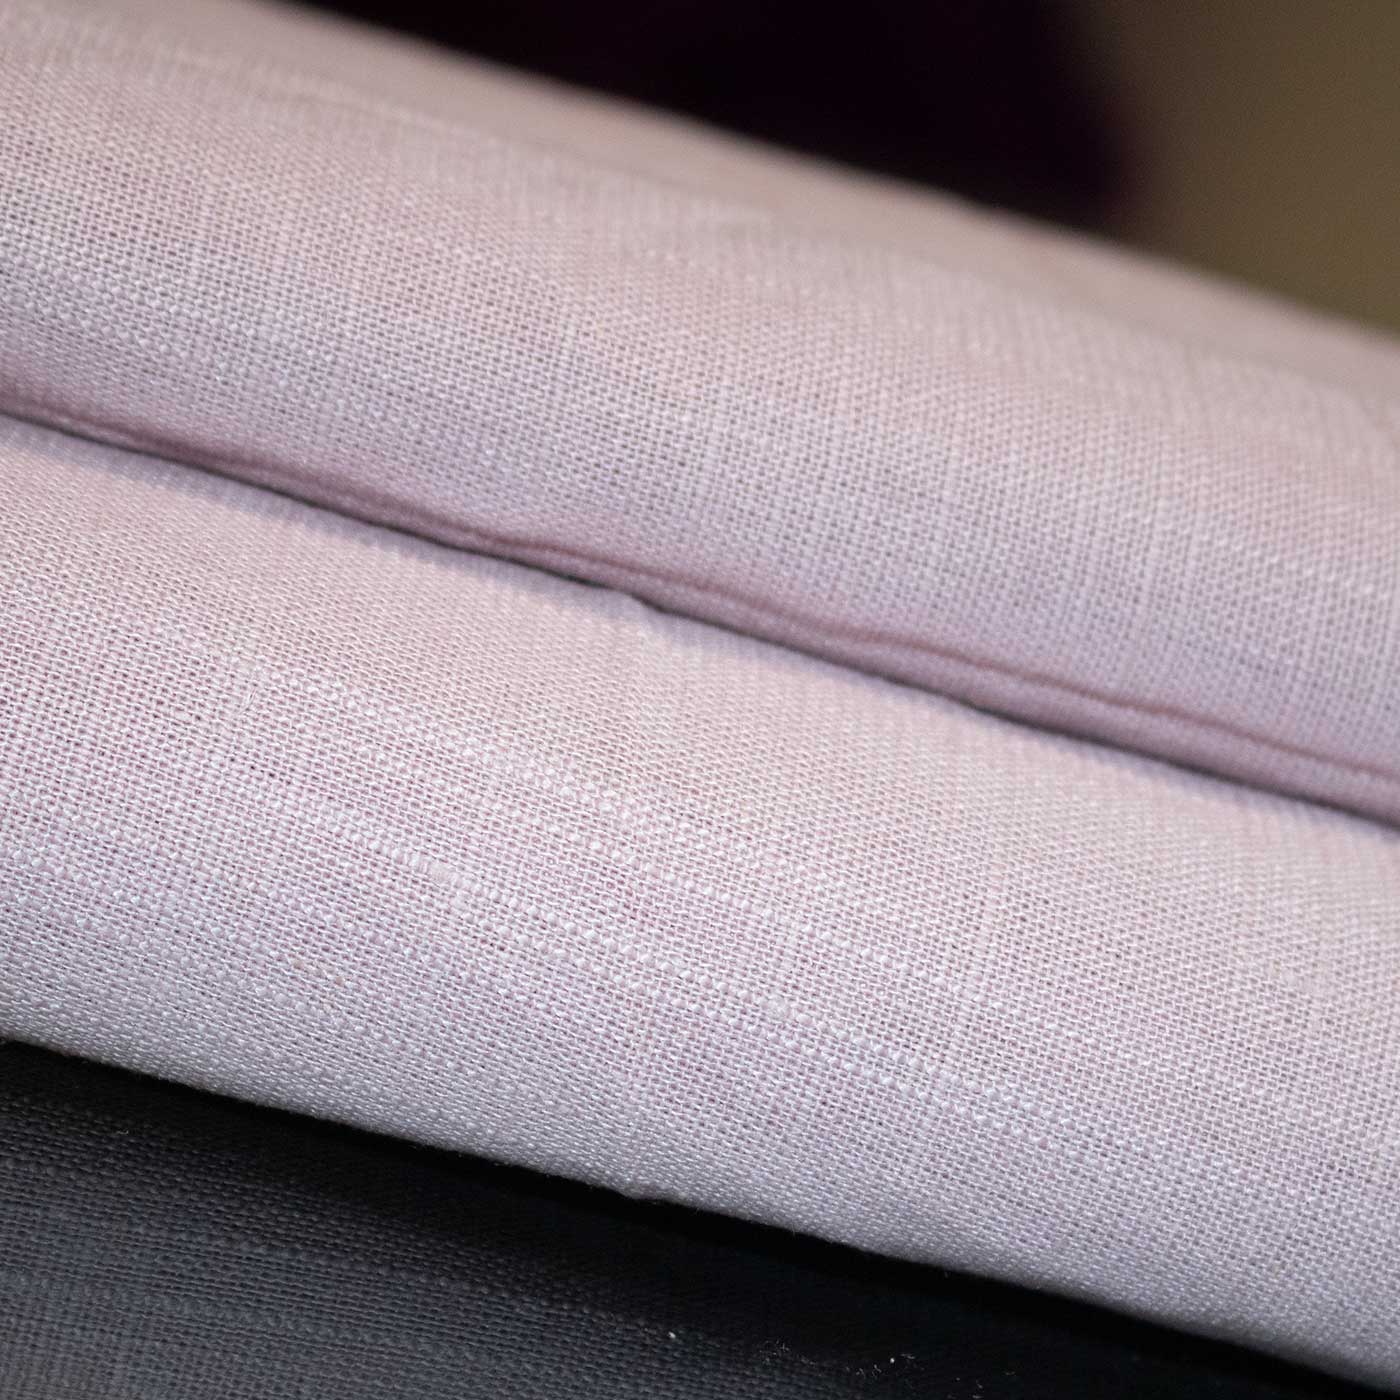 blush-pink-linen-fabric